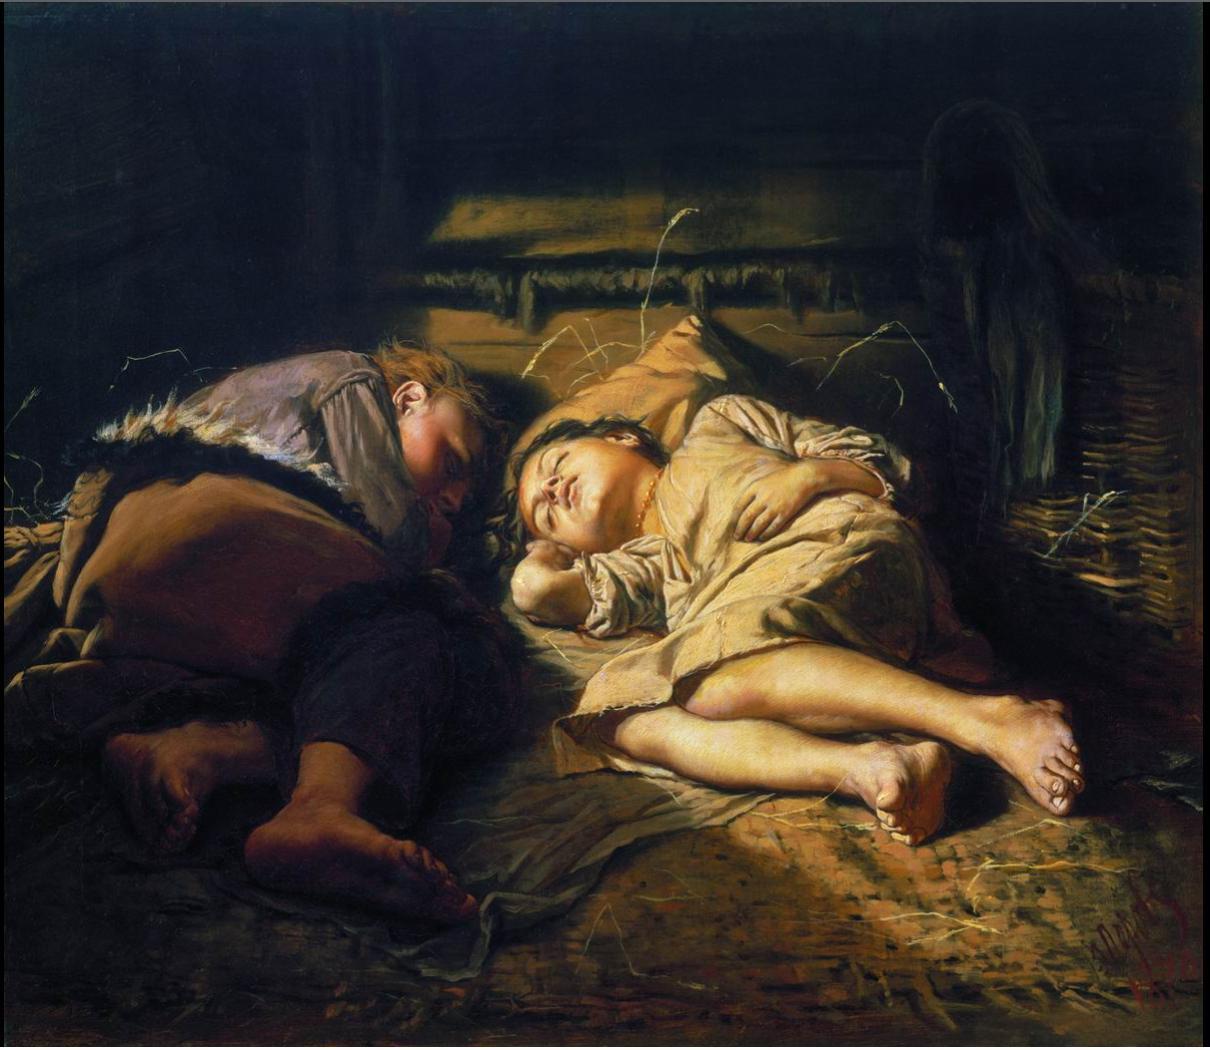 Sleeping Children (1870), Vasily Perov